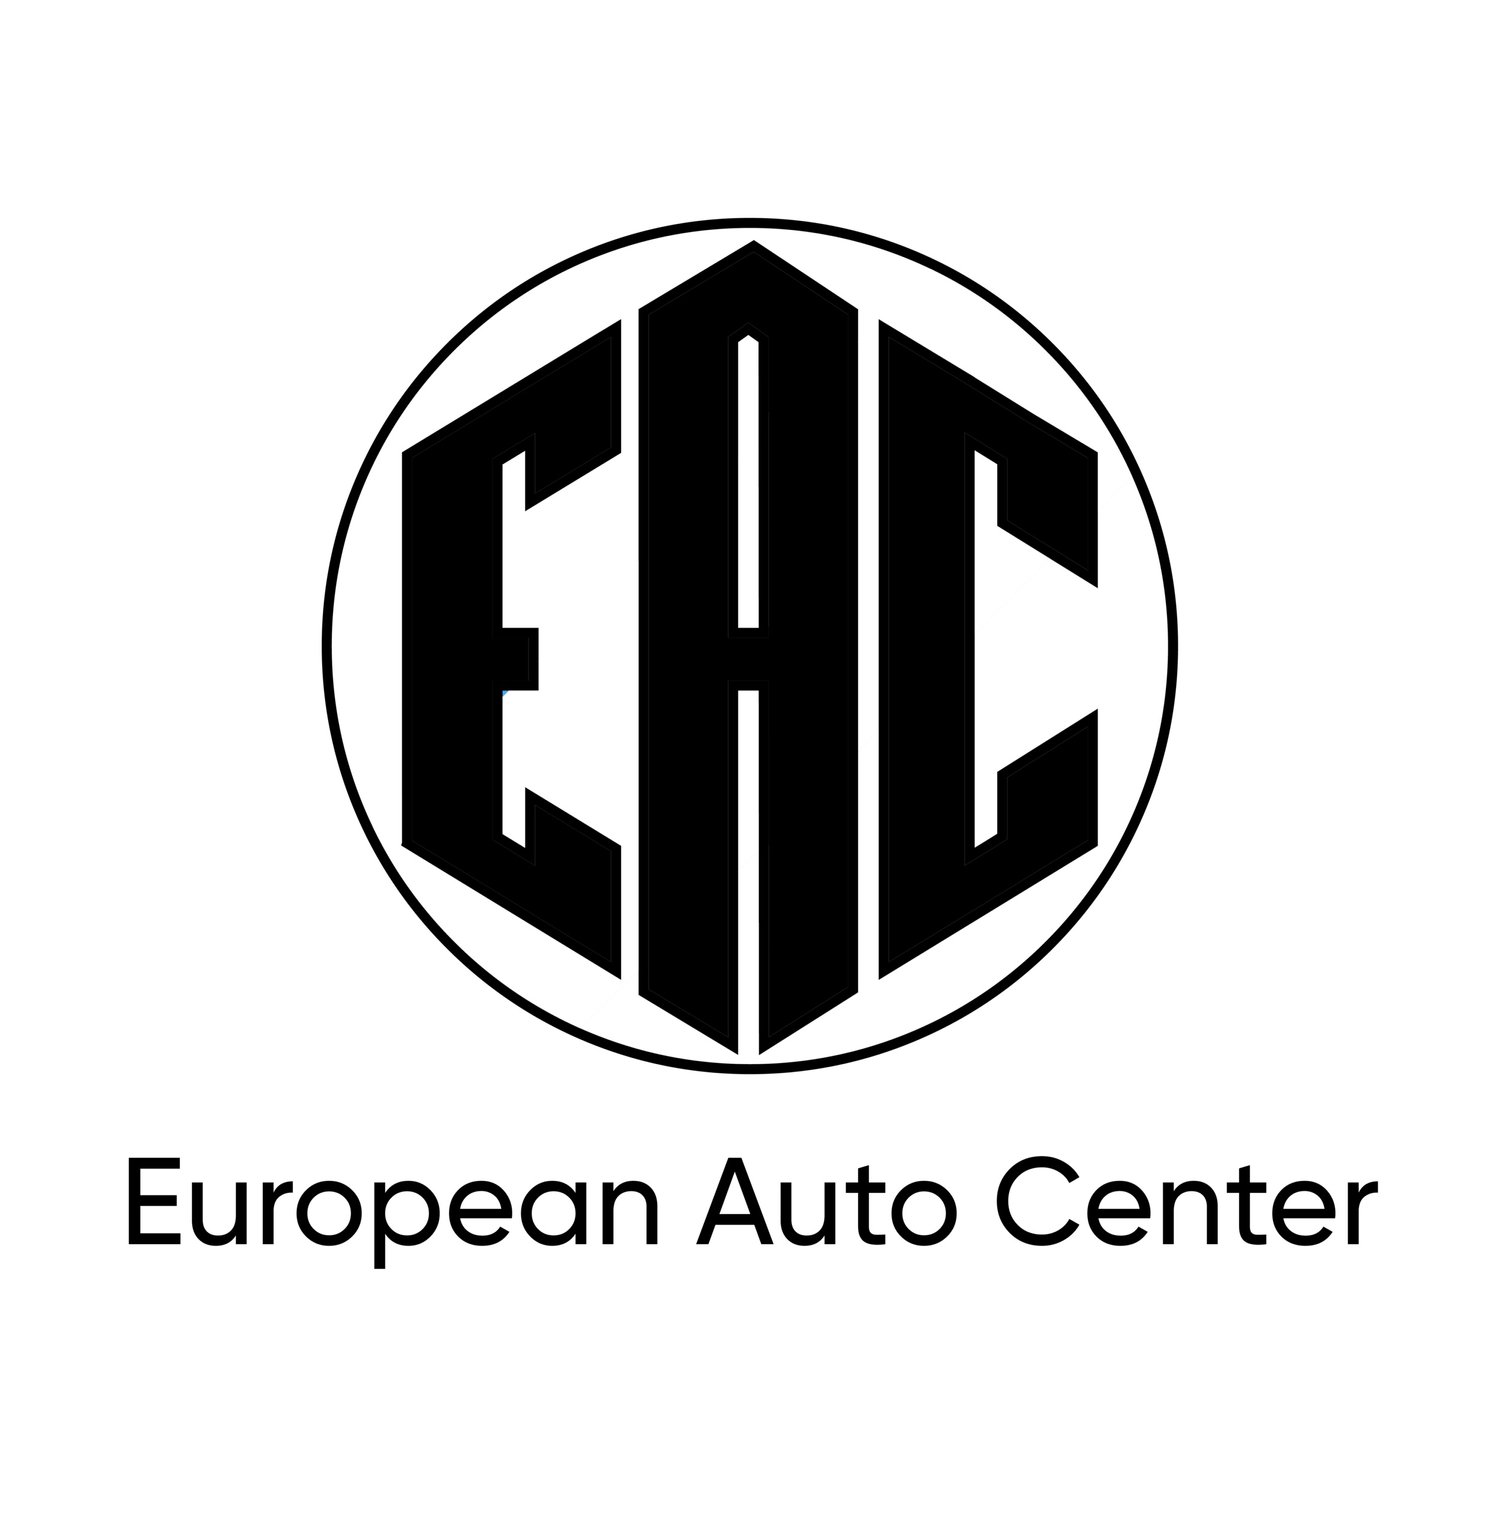 European Auto Center